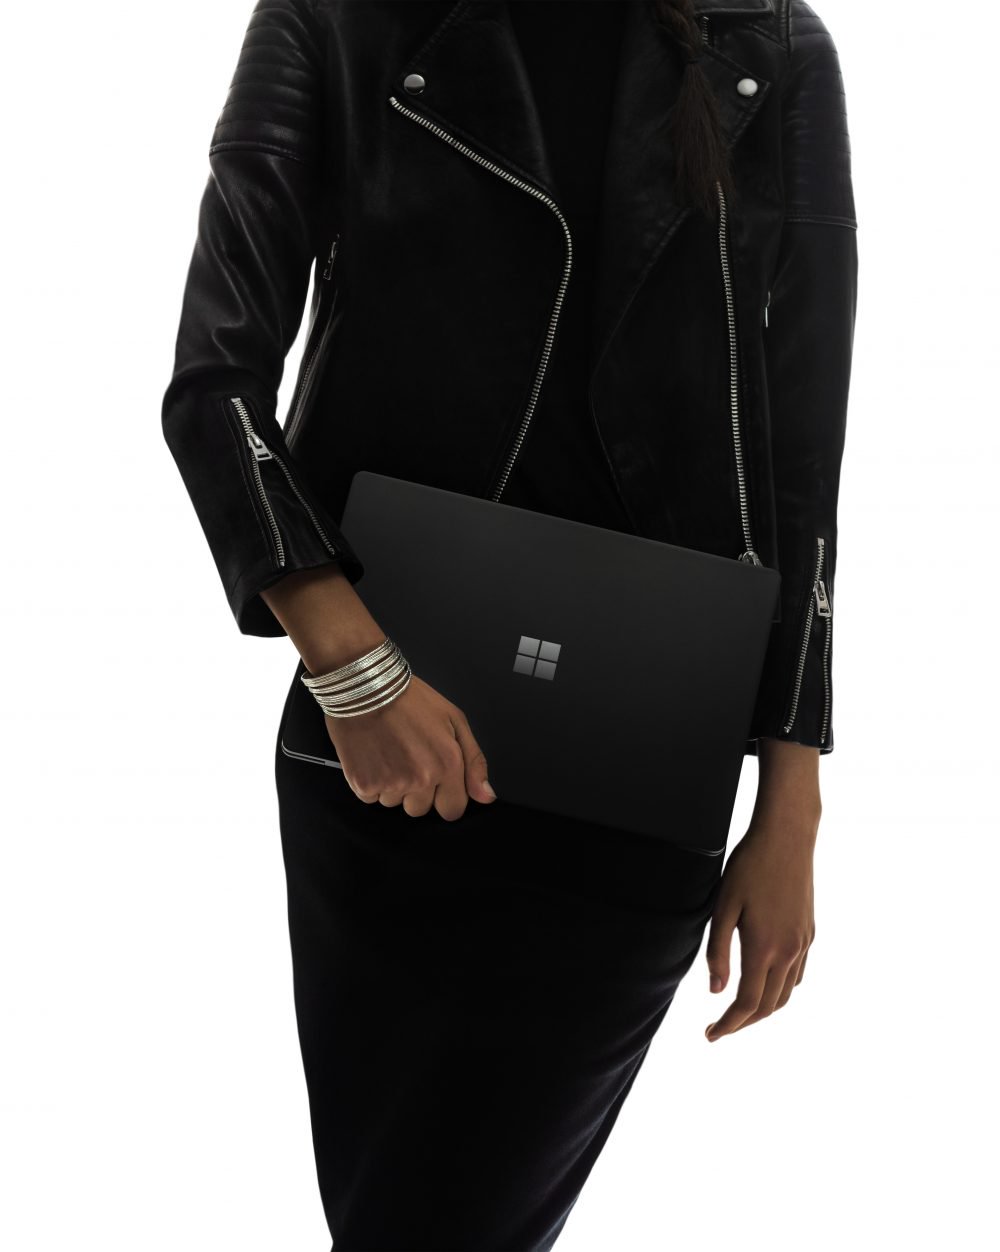 Date un capricho! Microsoft Surface Laptop 2 ahora con un descuento masivo de $ 300